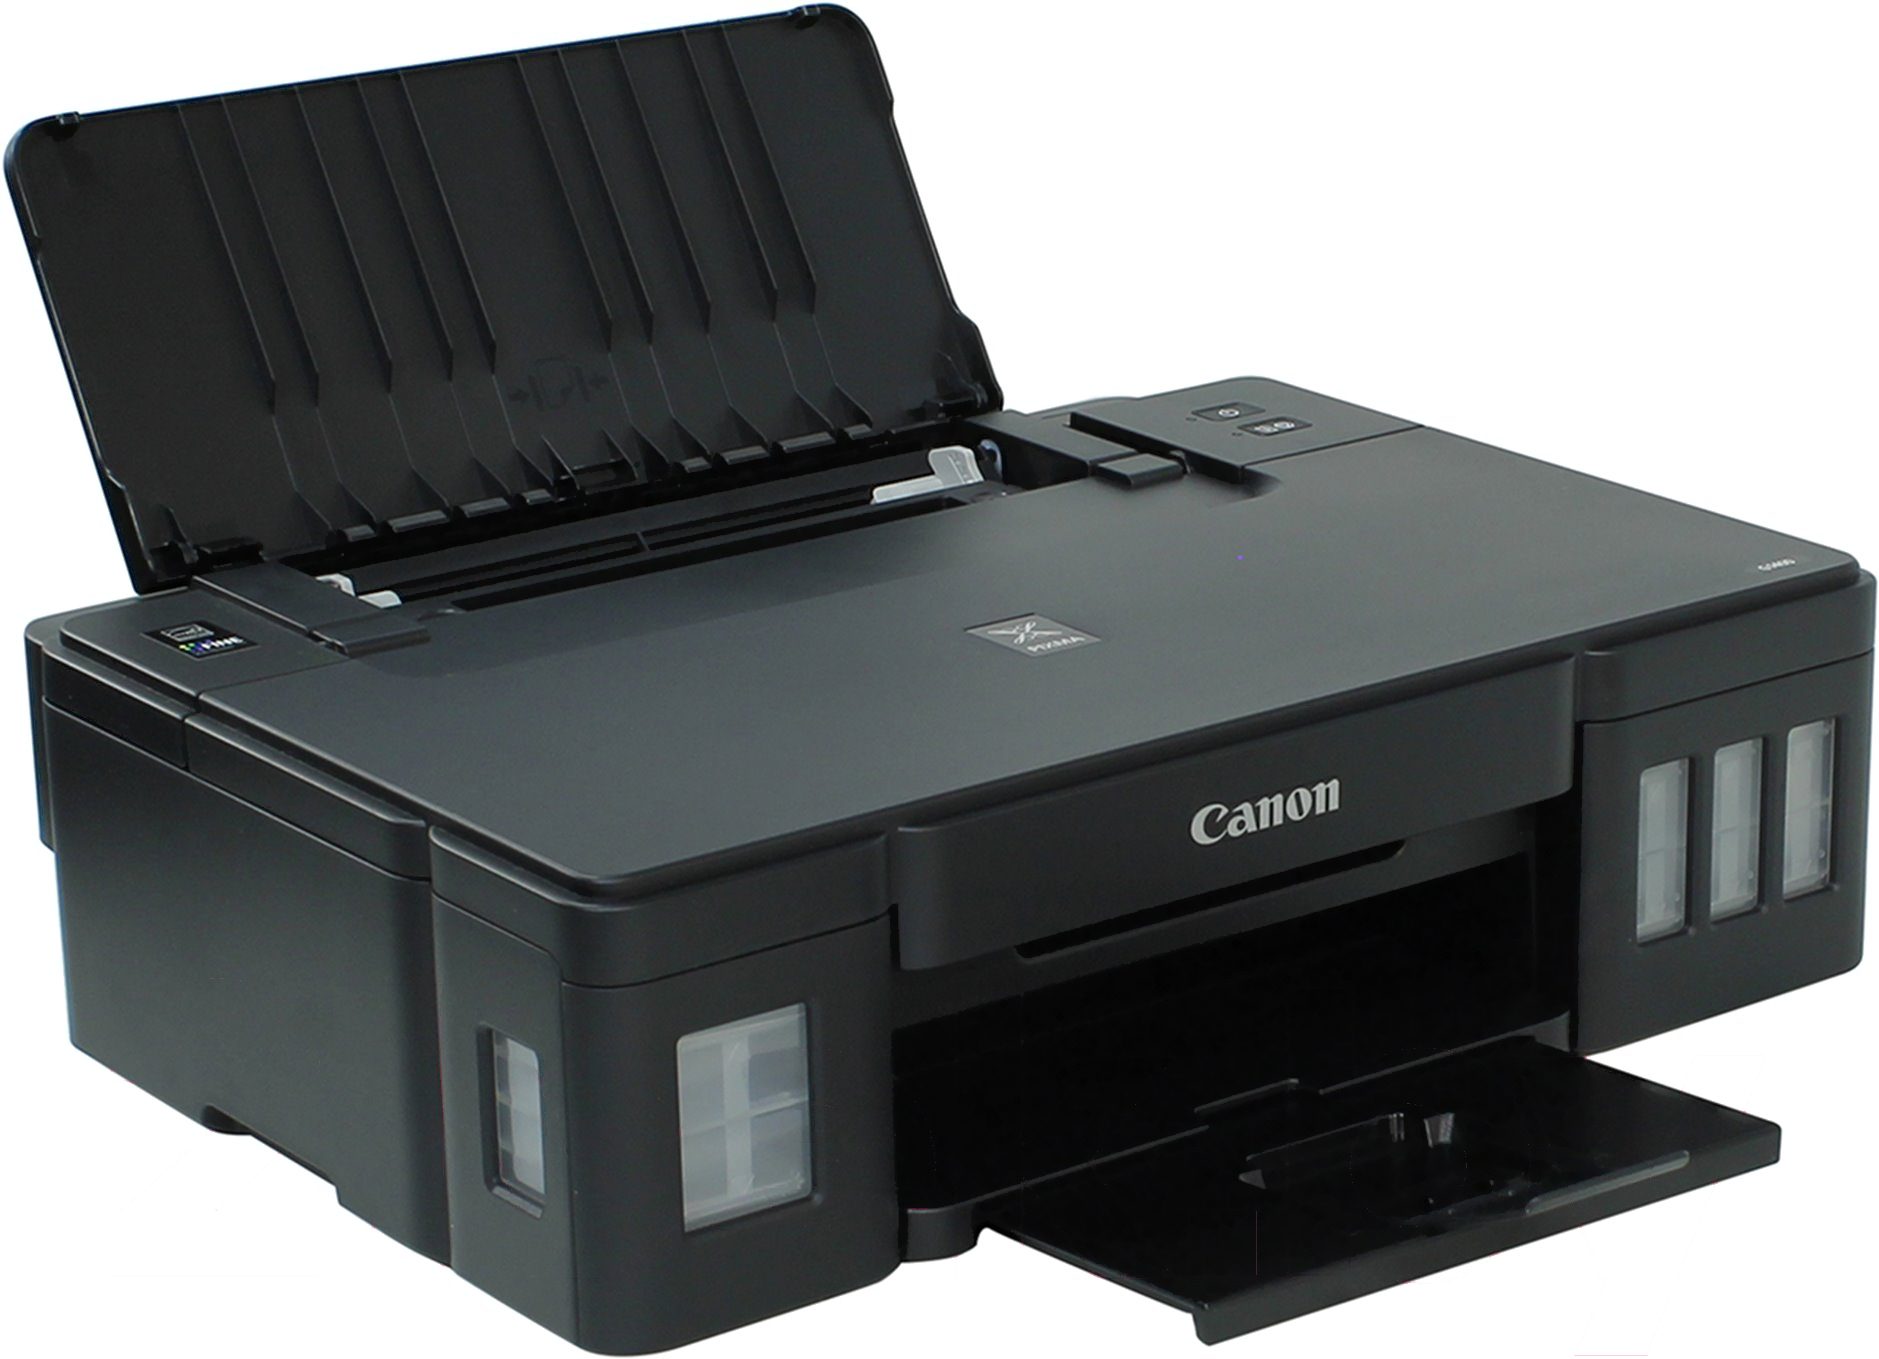 Принтер Canon PIXMA g1400. Кэнон 1400 принтер. Принтер Canon PIXMA g1410. Canon PIXMA 1400. G 1400